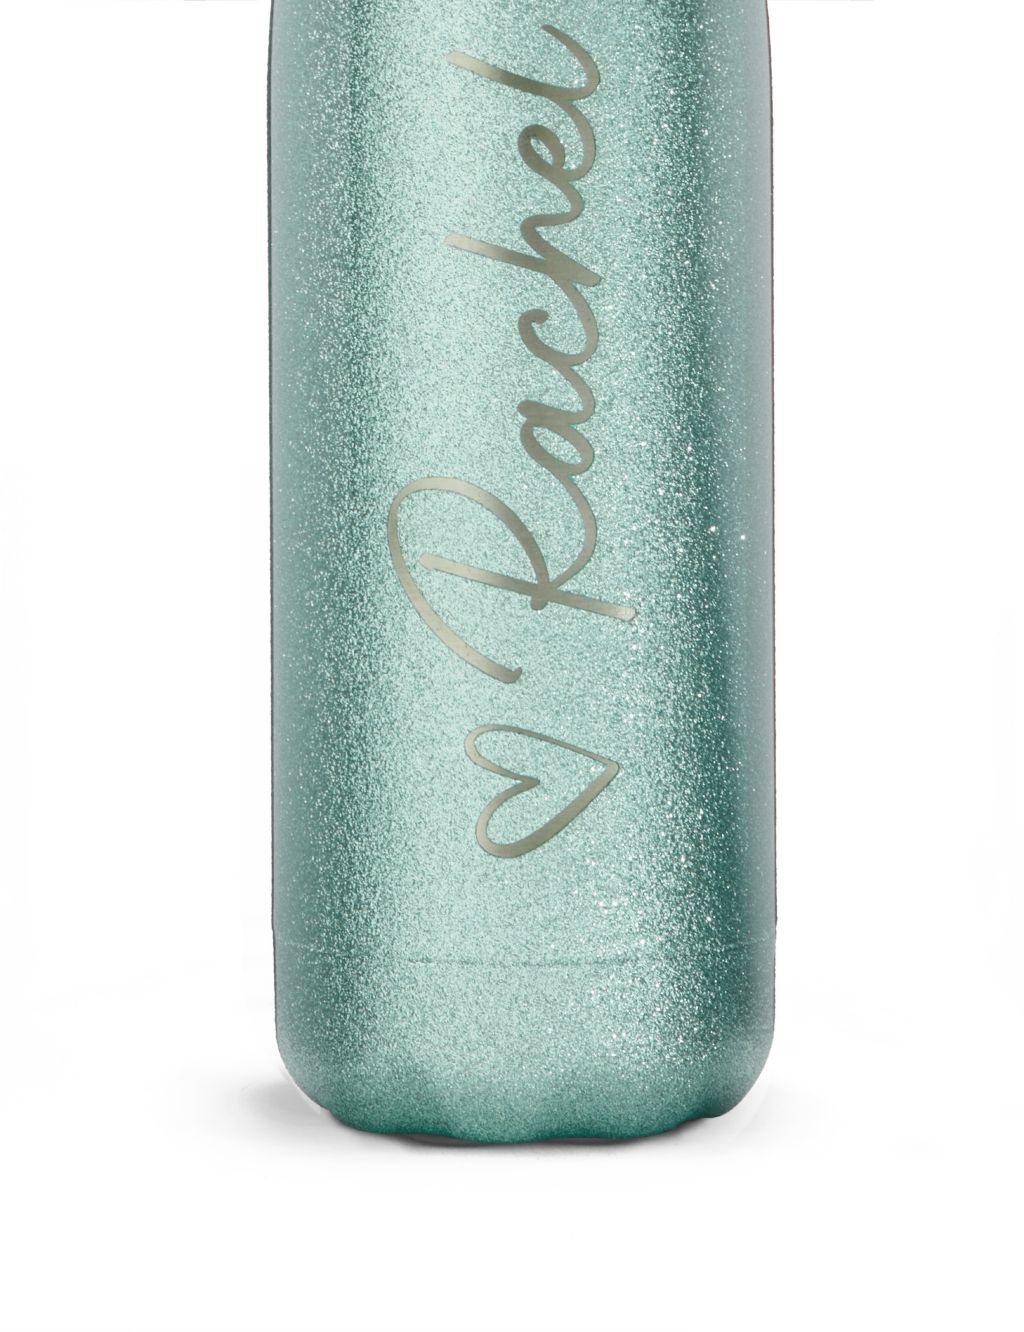 Personalised Water Bottle 2 of 3